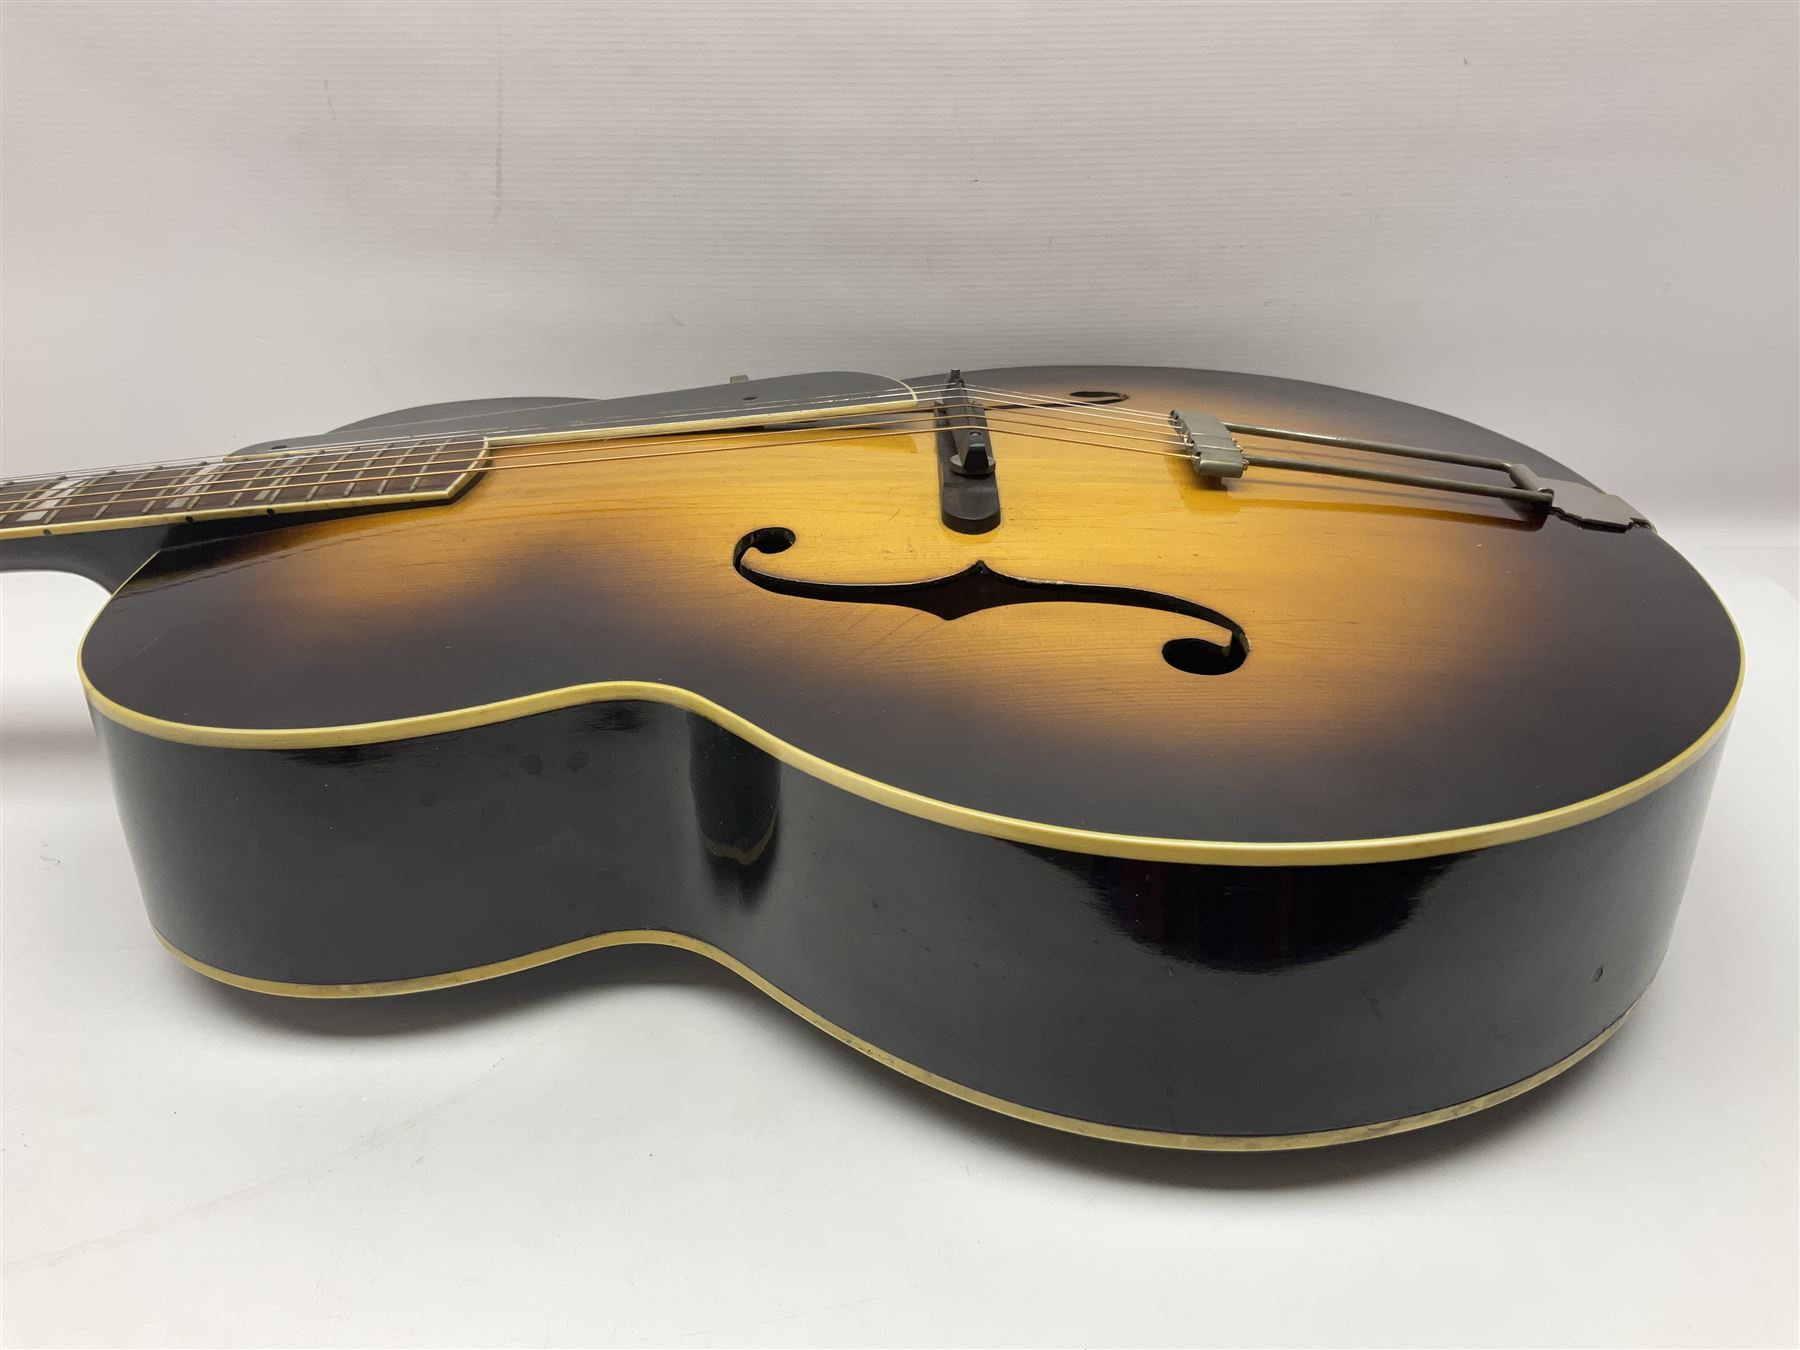 Clifford Essex Paragon De Luxe handmade acoustic guitar c1936 with tobacco sunburst finish and origi - Image 16 of 24